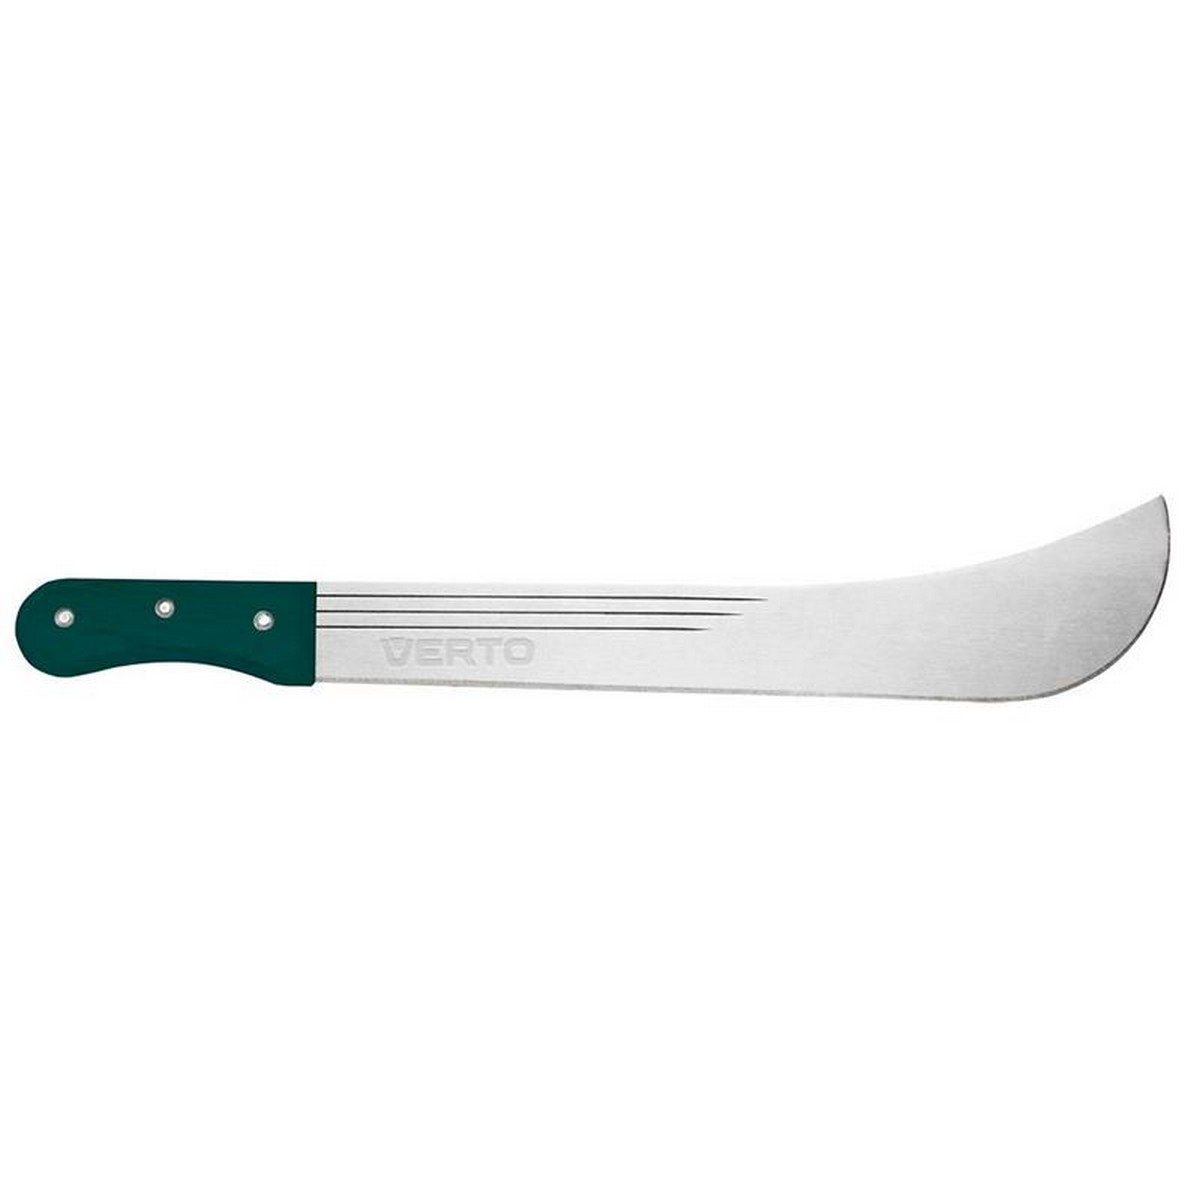 Цена нож мачете садовый Verto 15G191 в Харькове